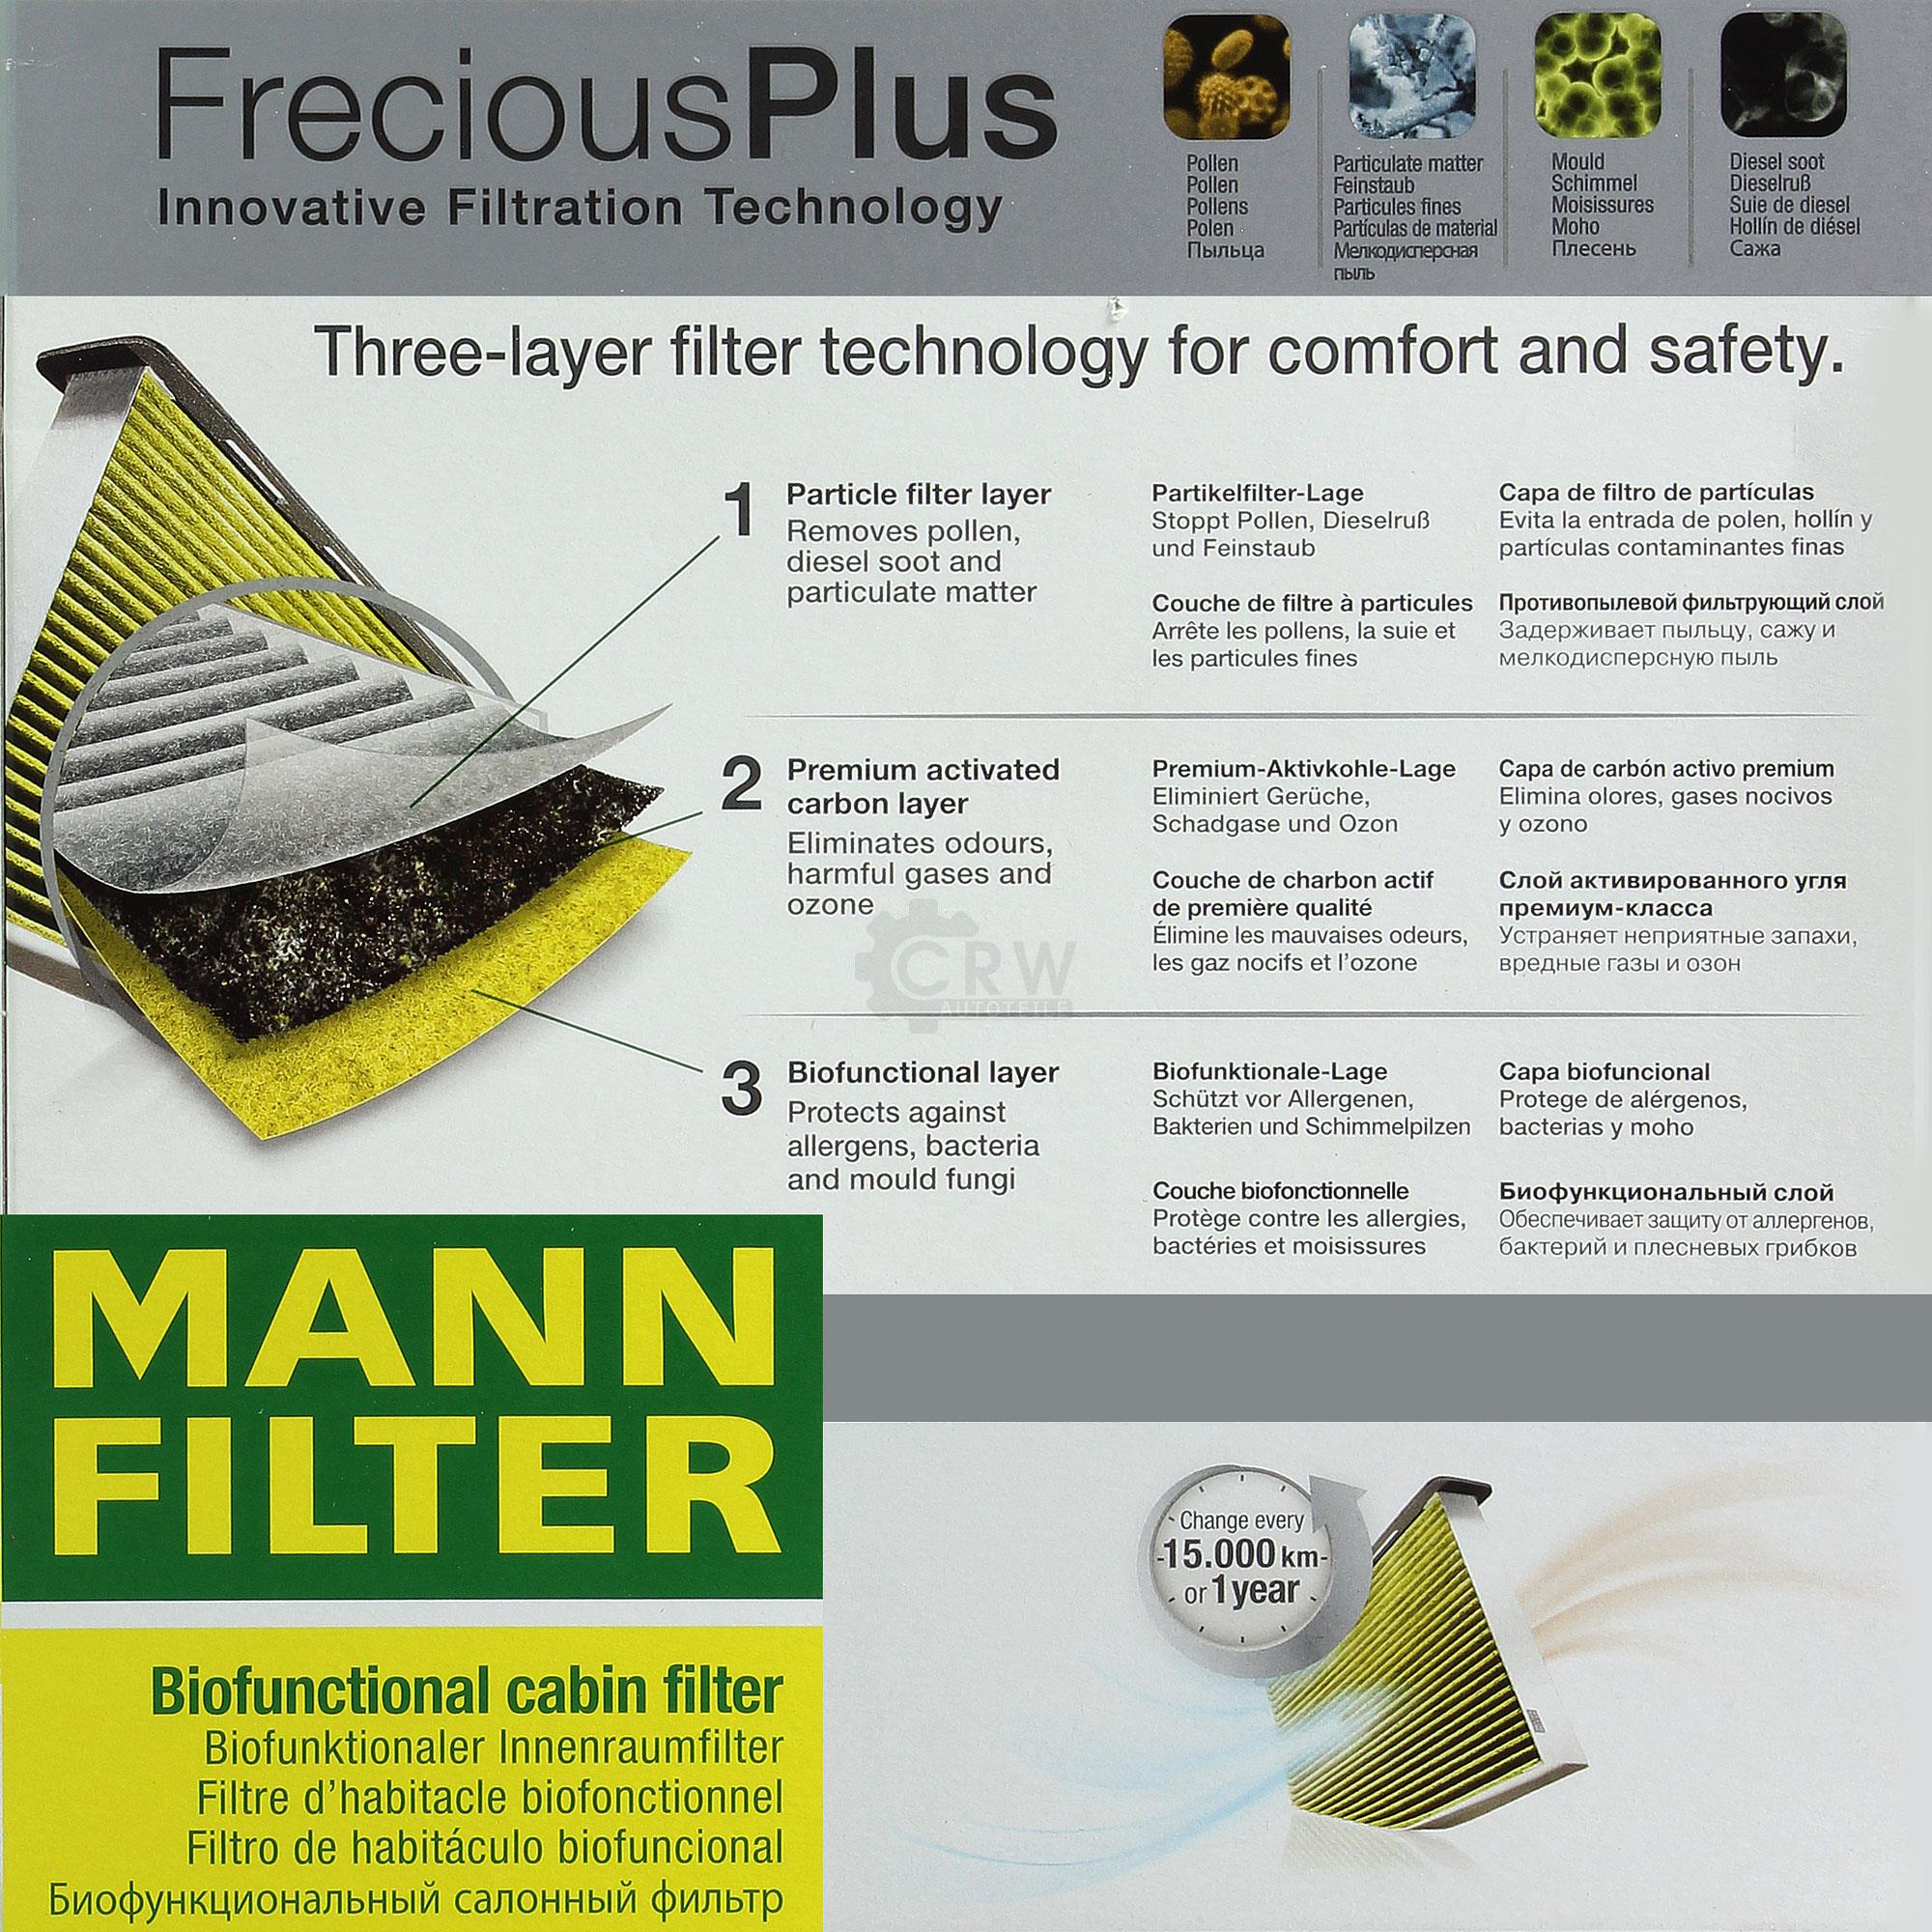 MANN-Filter Innenraumfilter Biofunctional für Allergiker FP 22 011